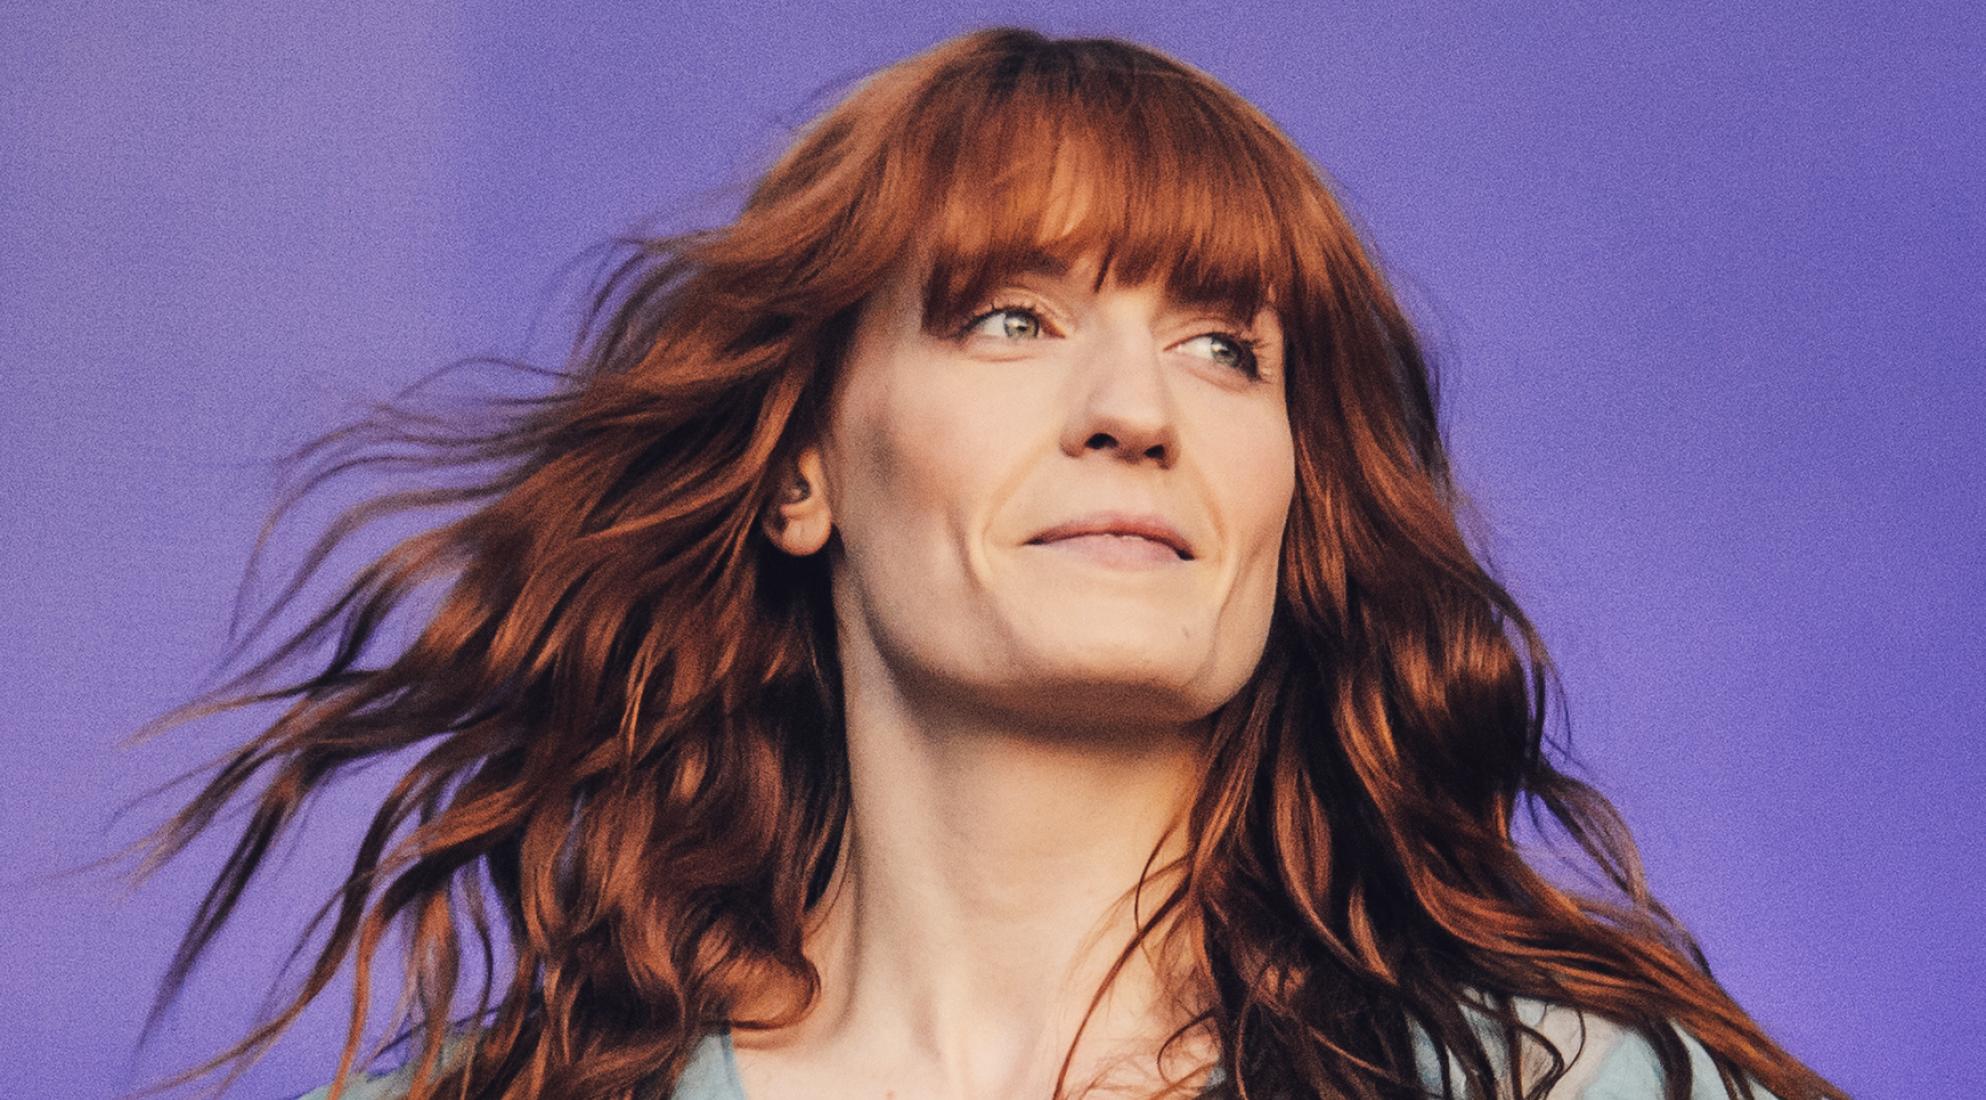 Florence & The Machine publica su nuevo disco ‘High as Hope’